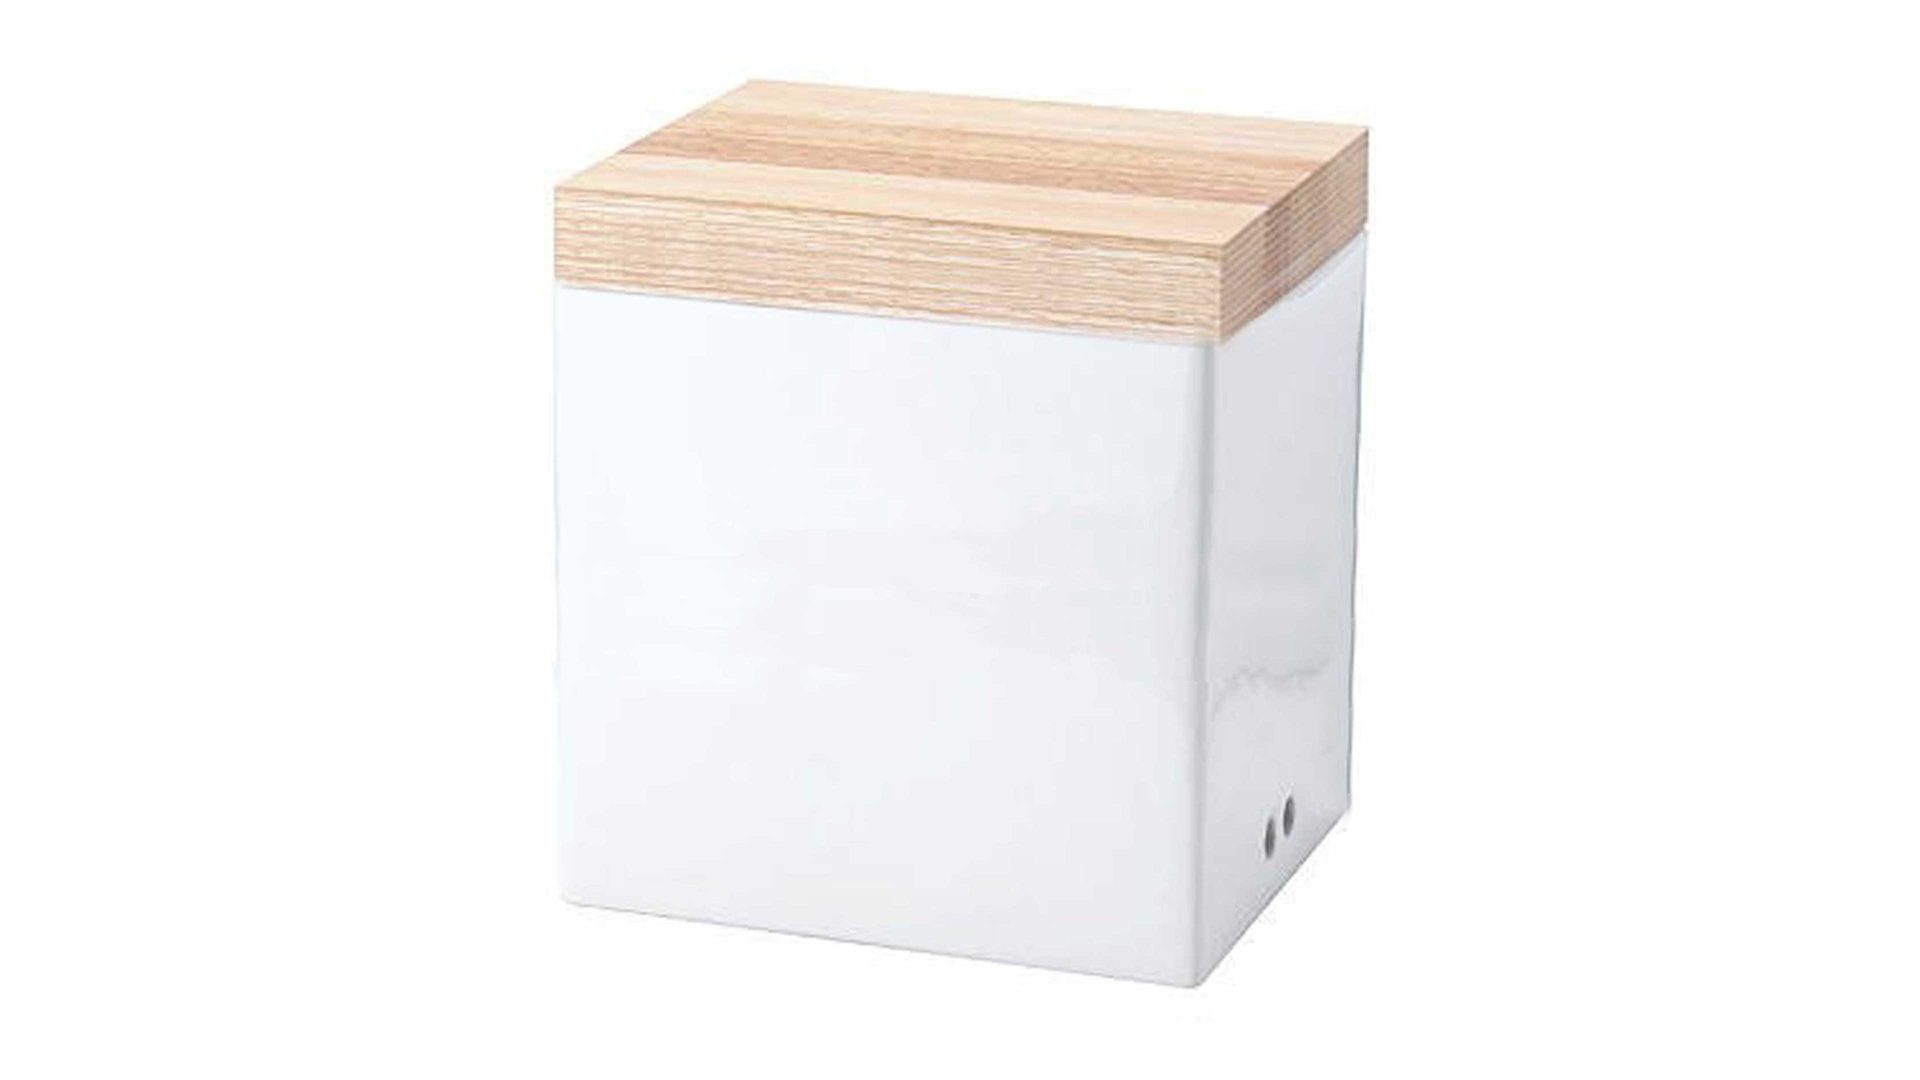 Dose Continenta aus Keramik in Weiß CONTINENTA Vorratsdose weiße Keramik & Holz – ca. 18 x 21 x 16 cm